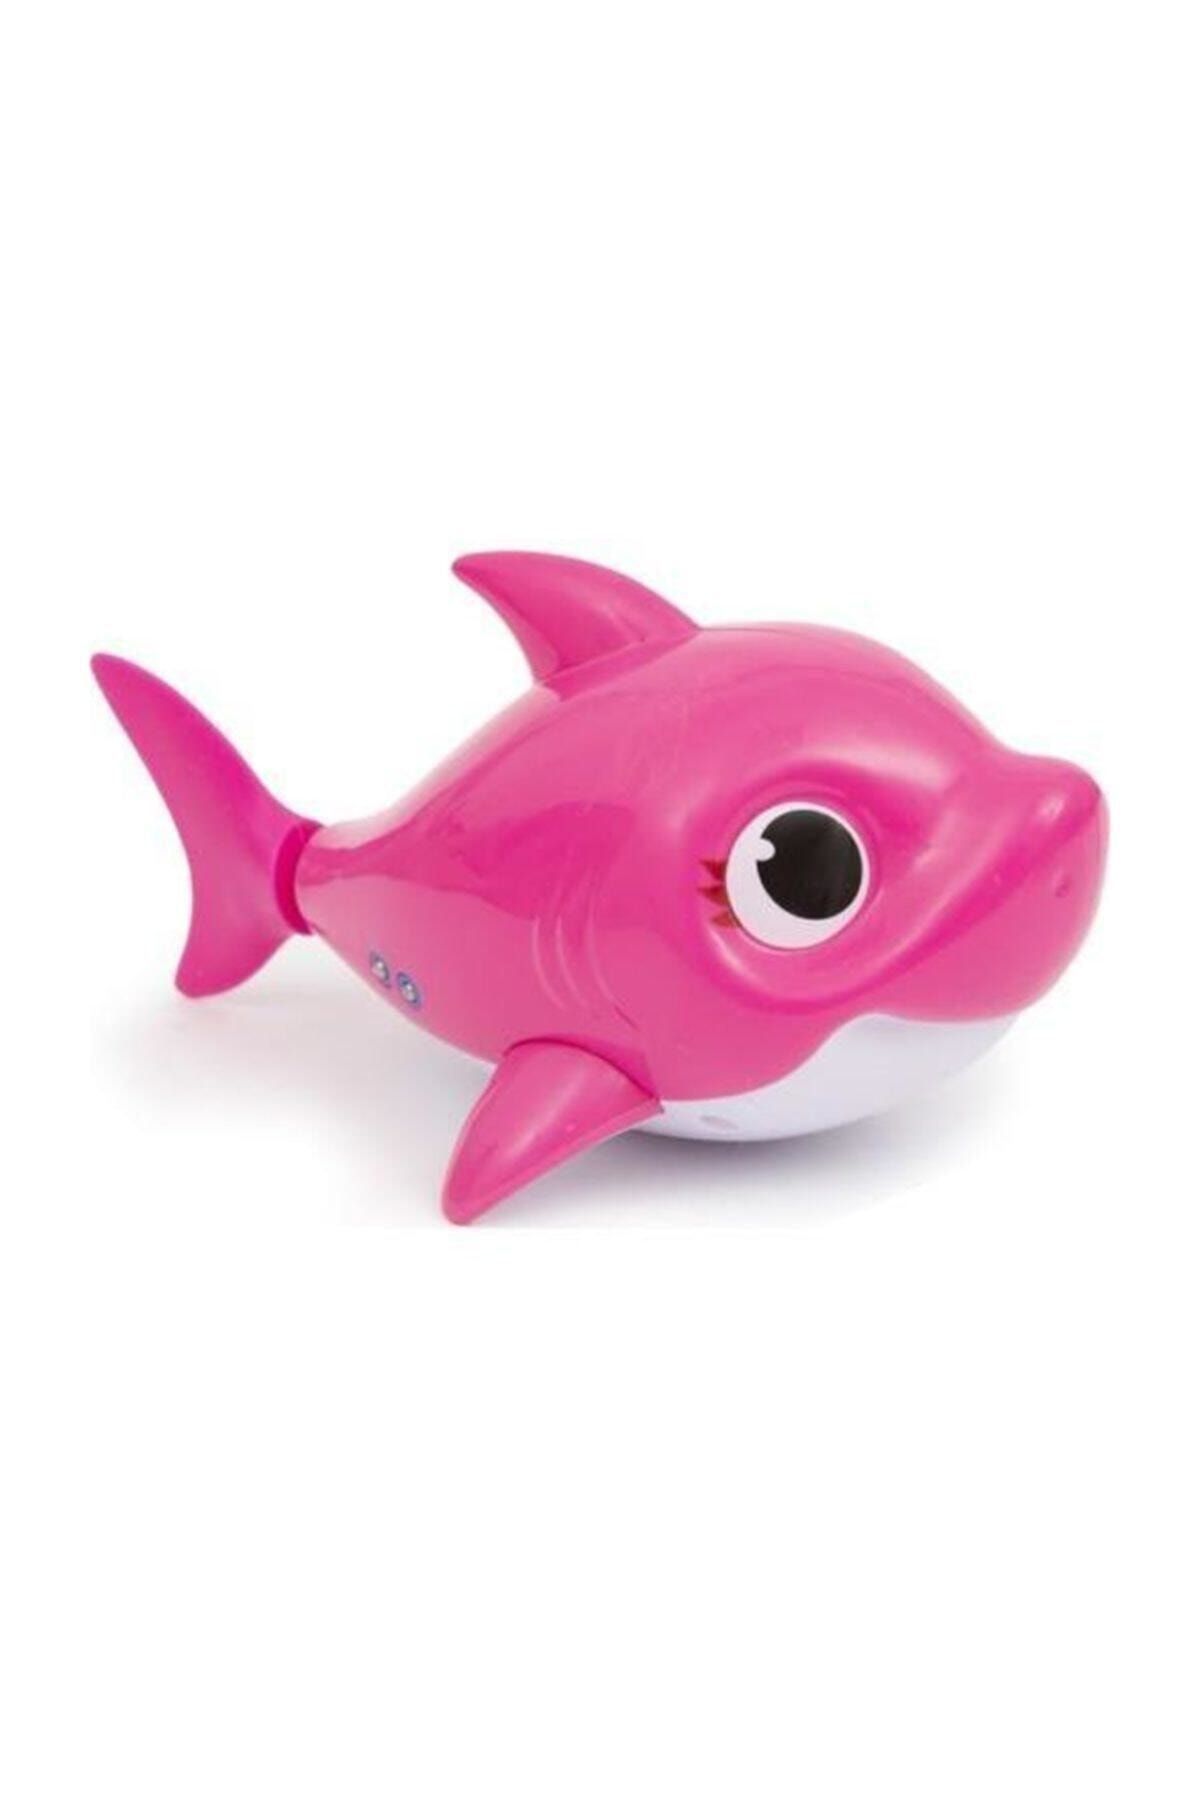 GIOCHI PREZIOSI Baby Shark Floating and Sound Figure Bath Toy Pink